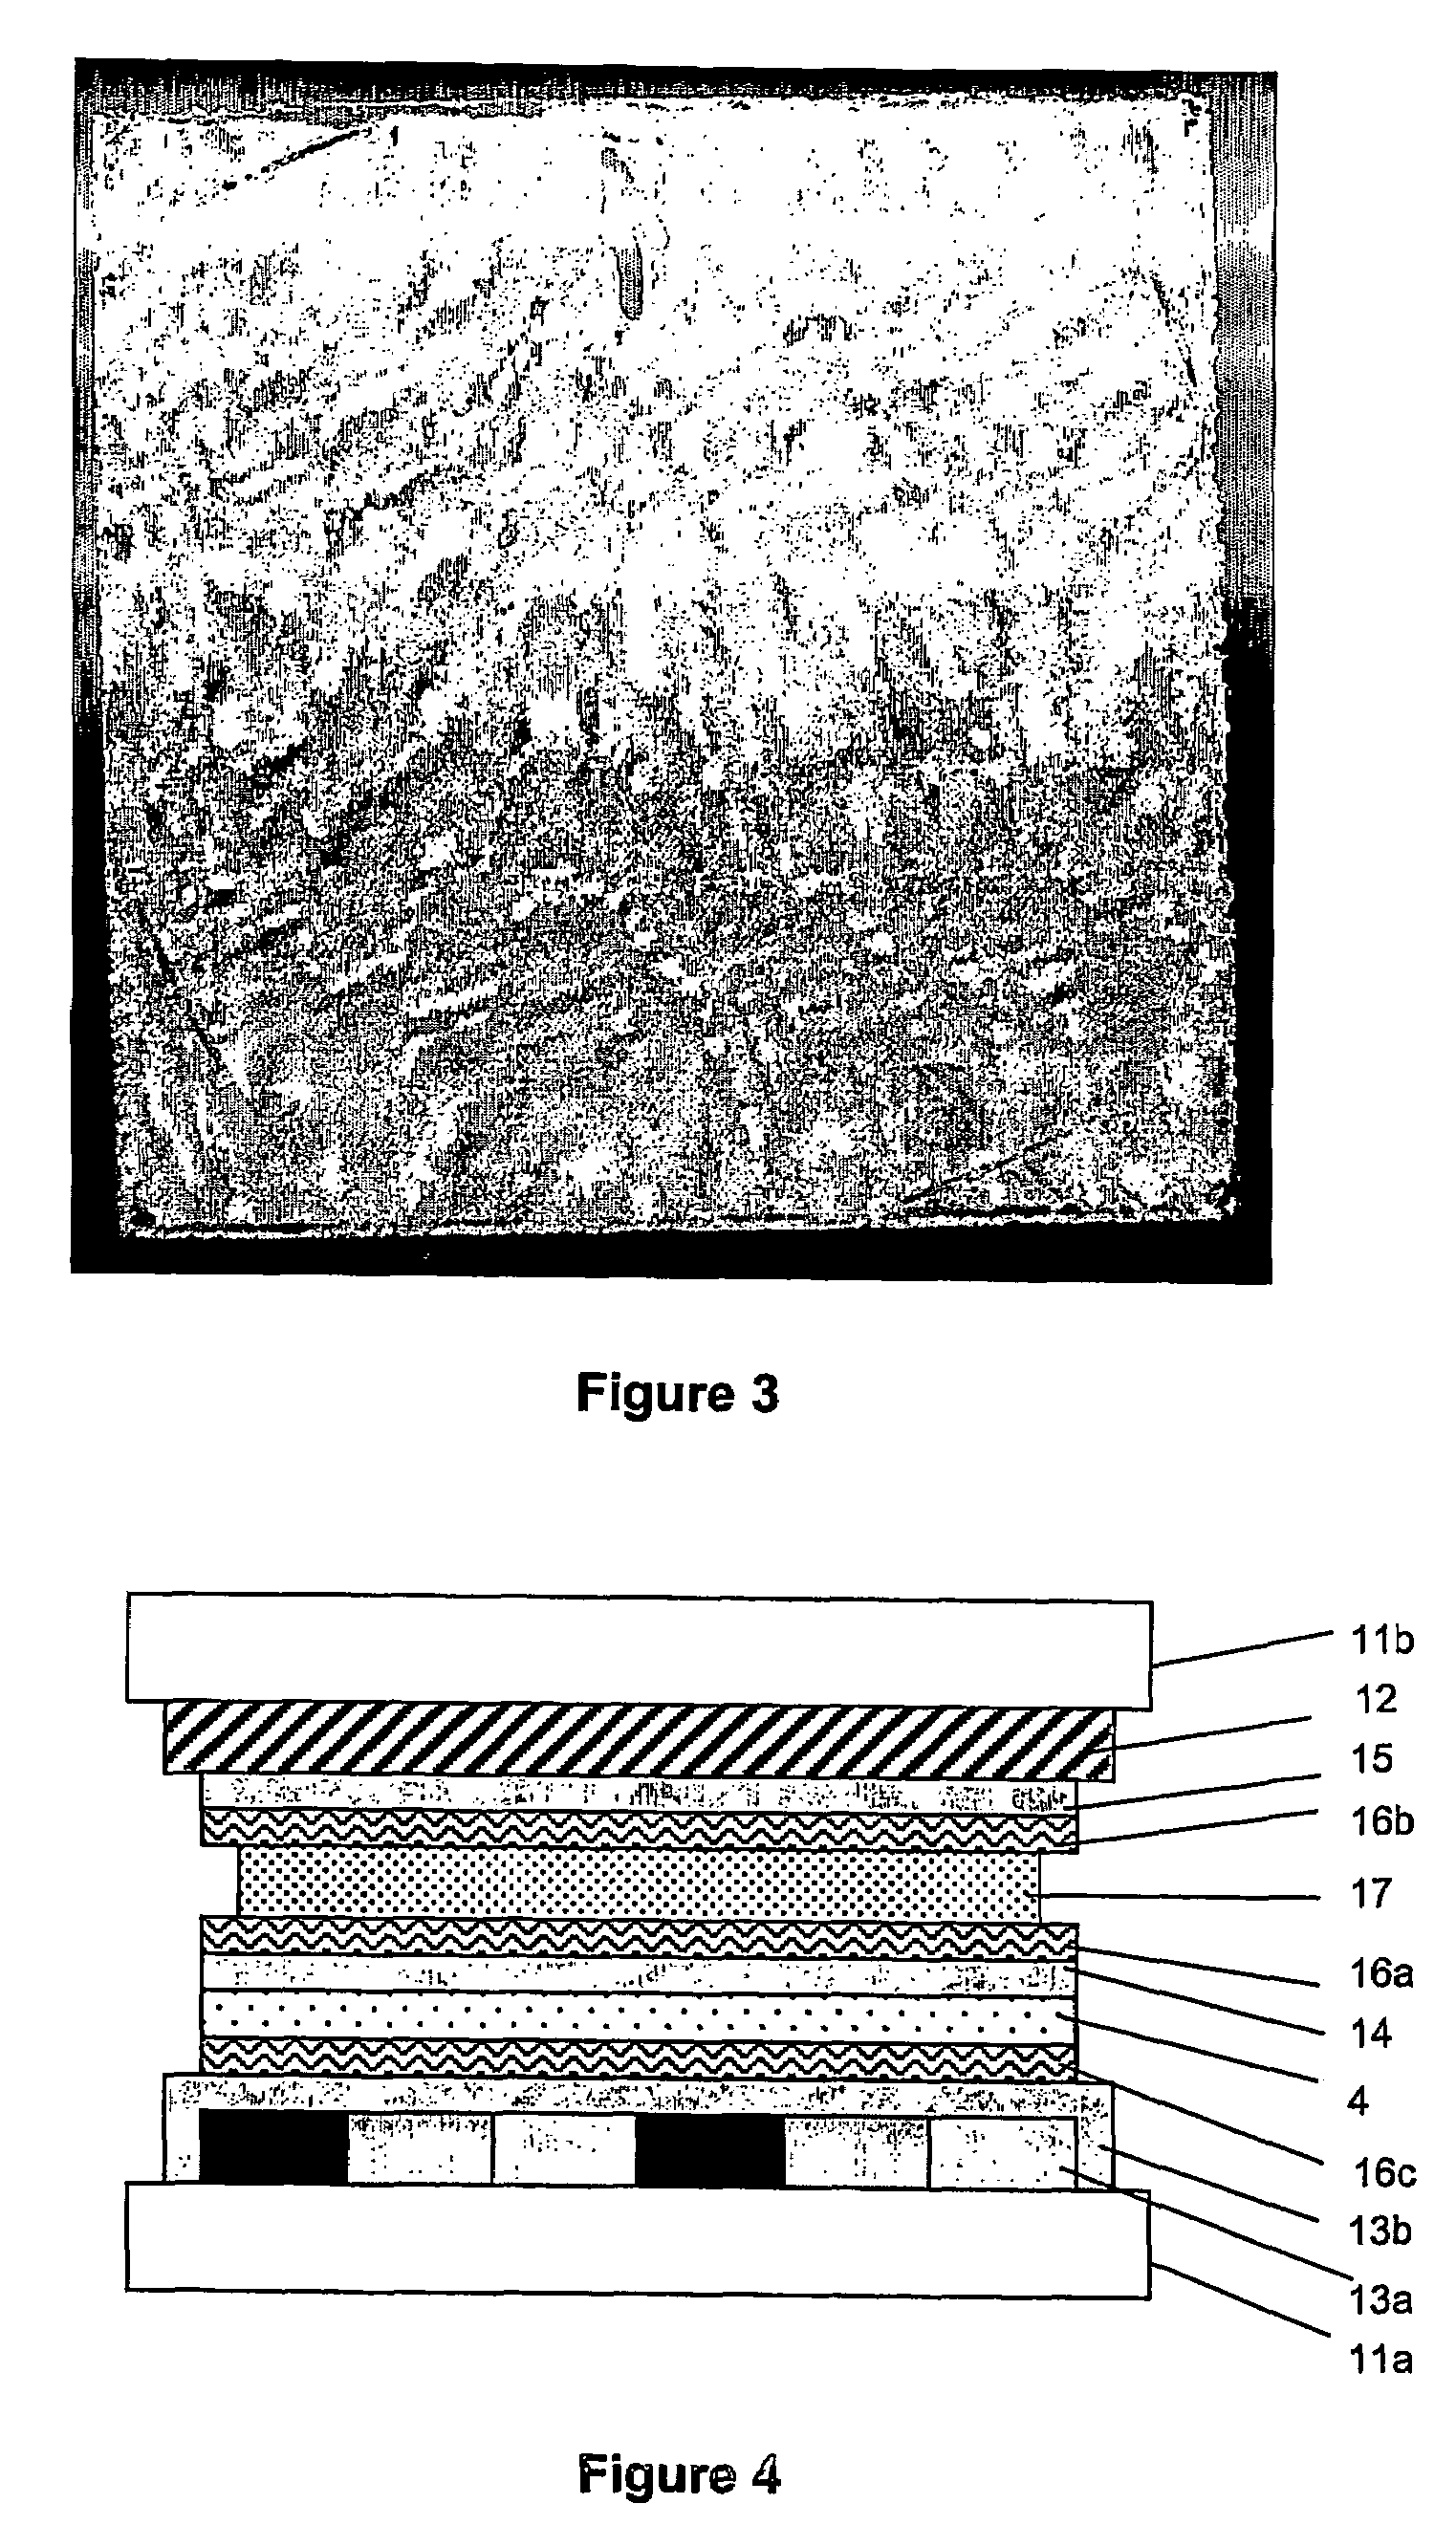 Polymerised liquid crystal film with retardation or orientation pattern